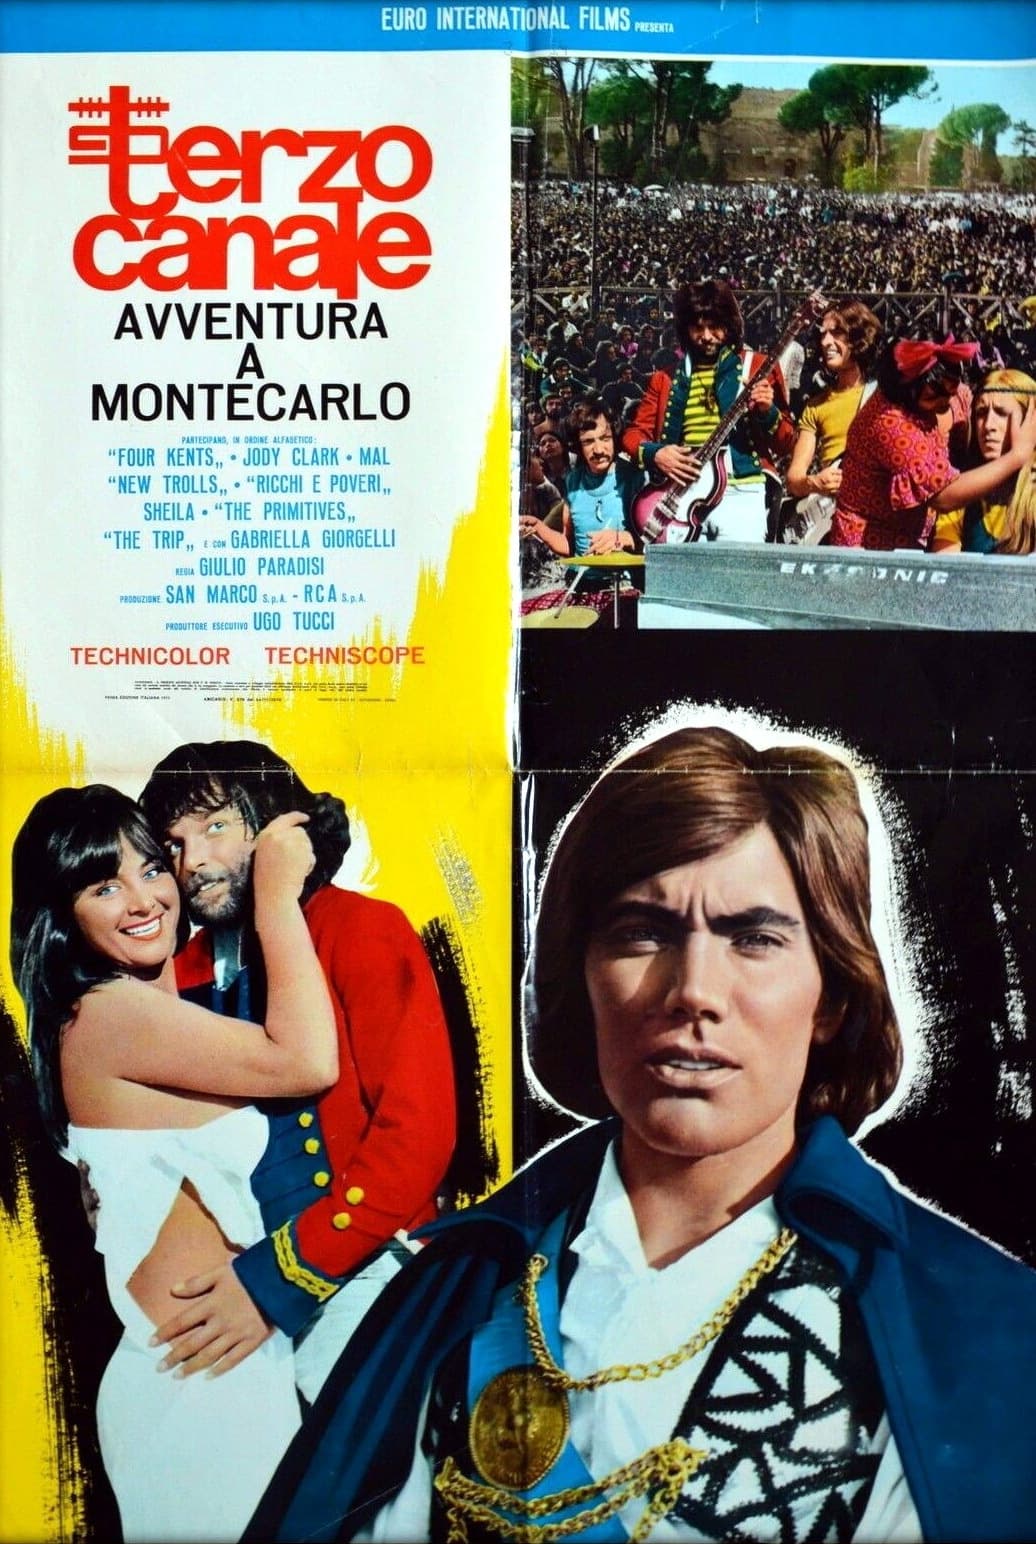 Terzo canale - Avventura a Montecarlo (1970)